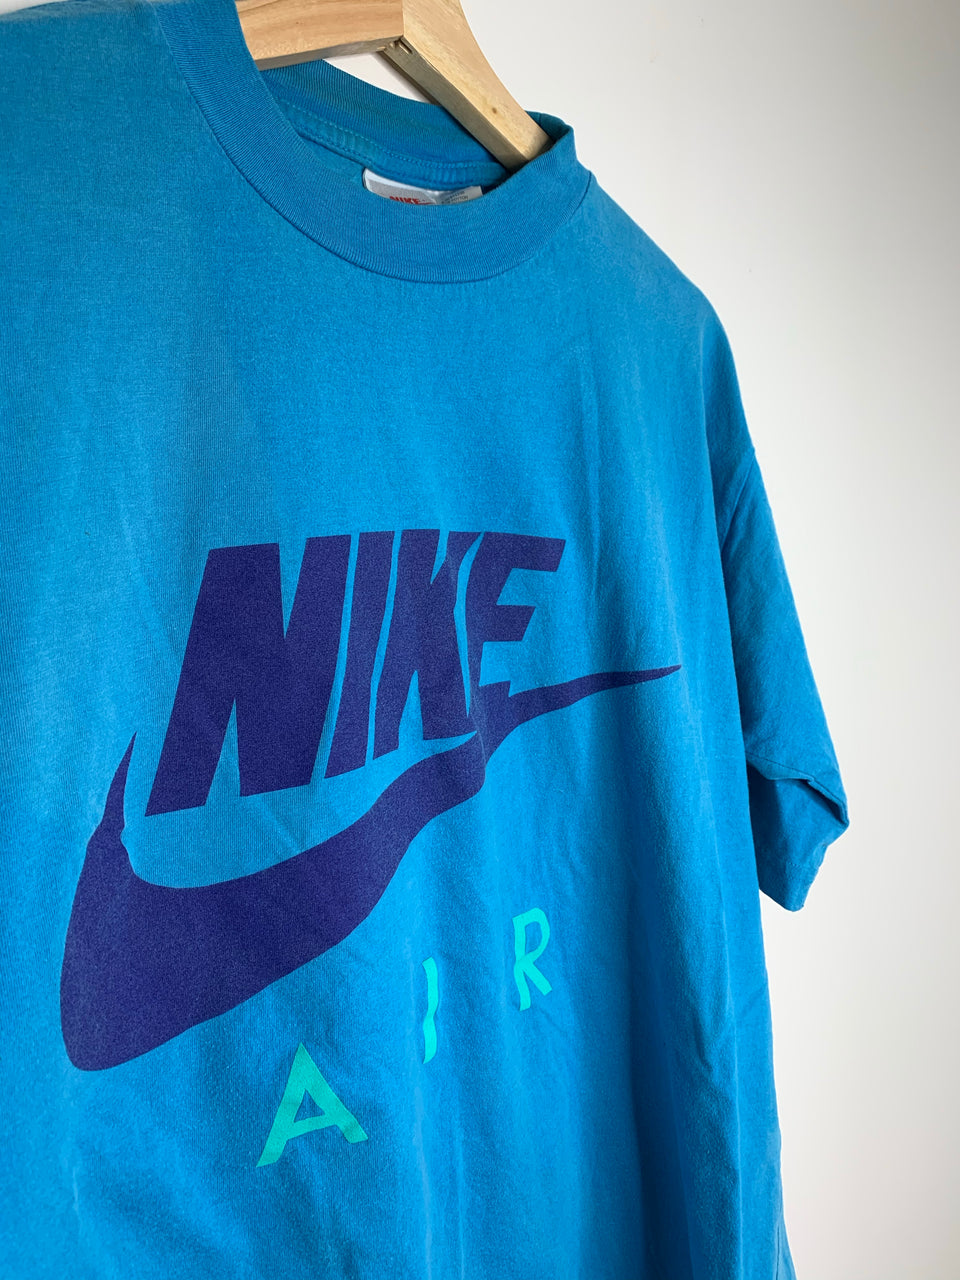 Vintage Nike Air Blue Logo – The Youth Revolt